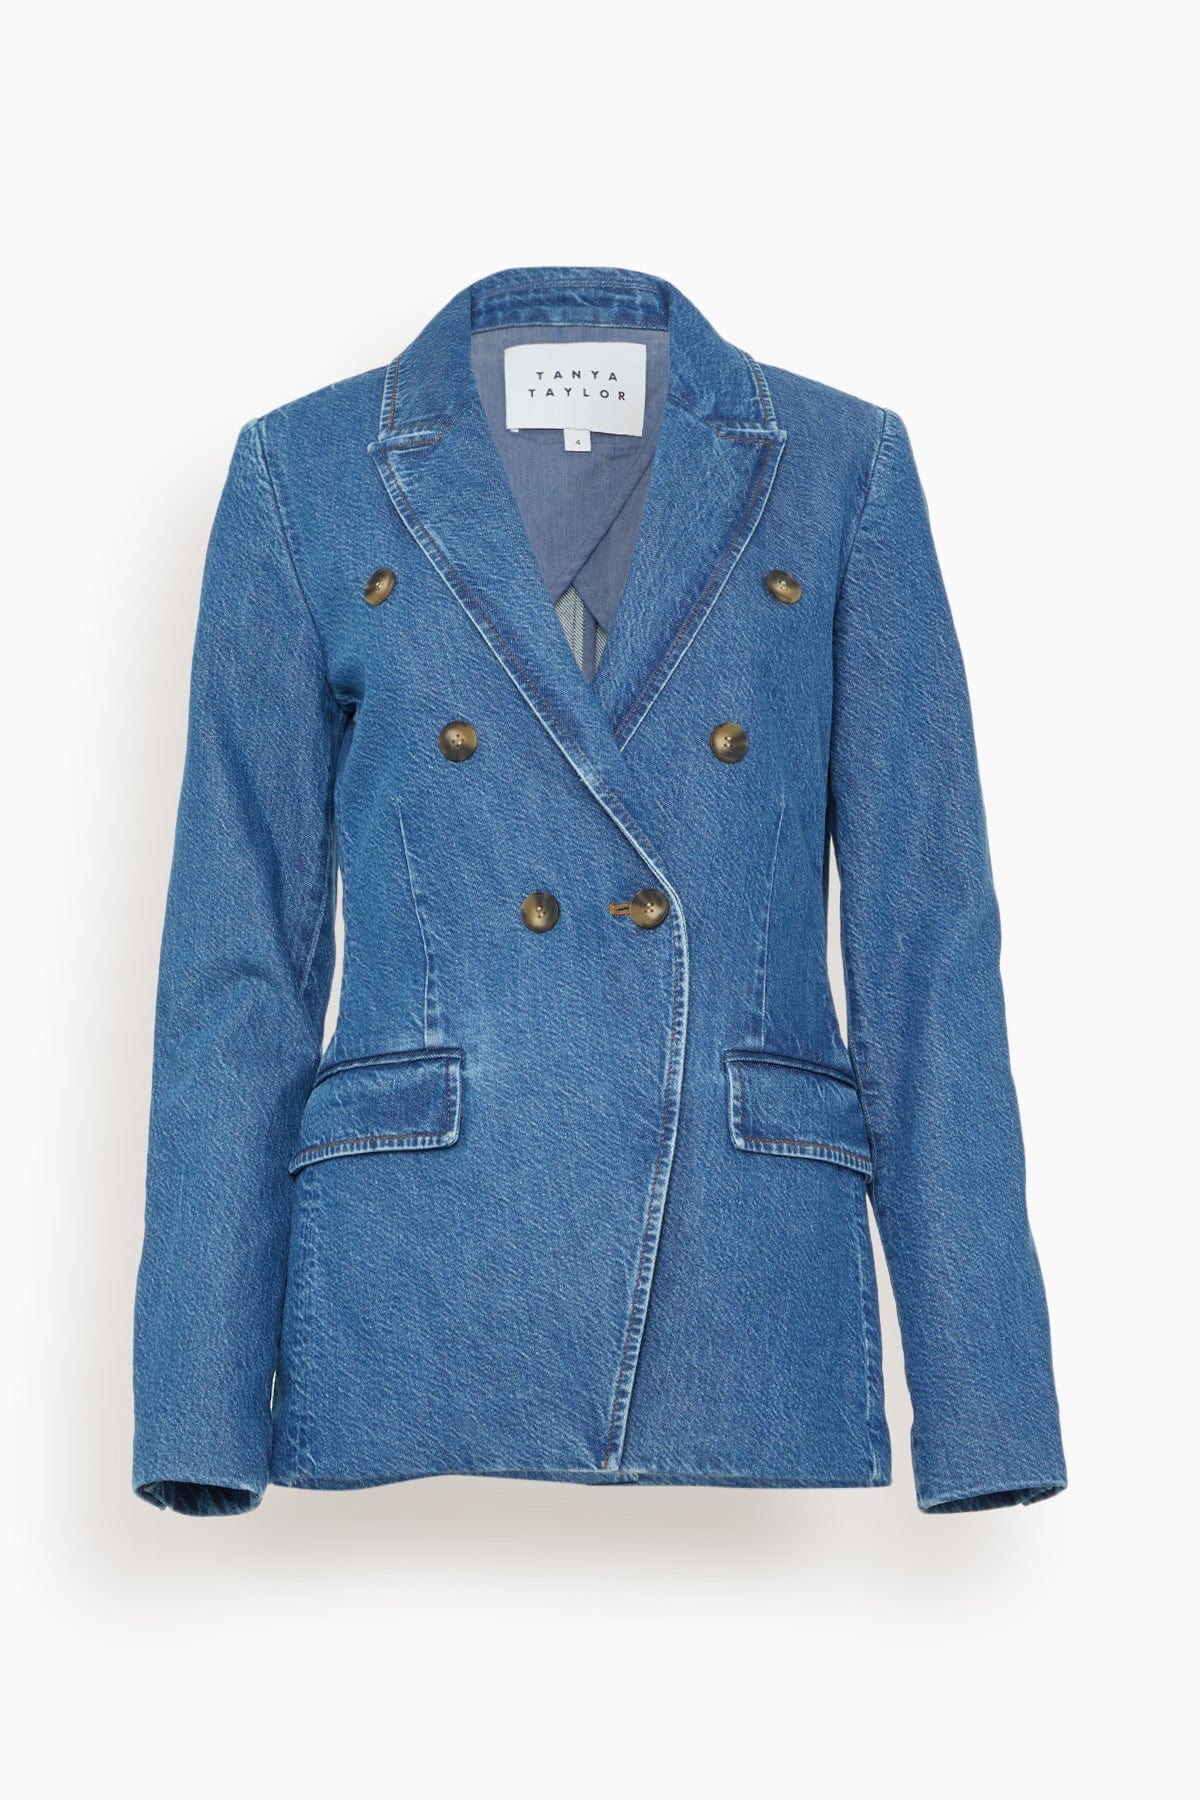 Tanya Taylor Jackets Michelle Denim Jacket in Medium Indigo Blue